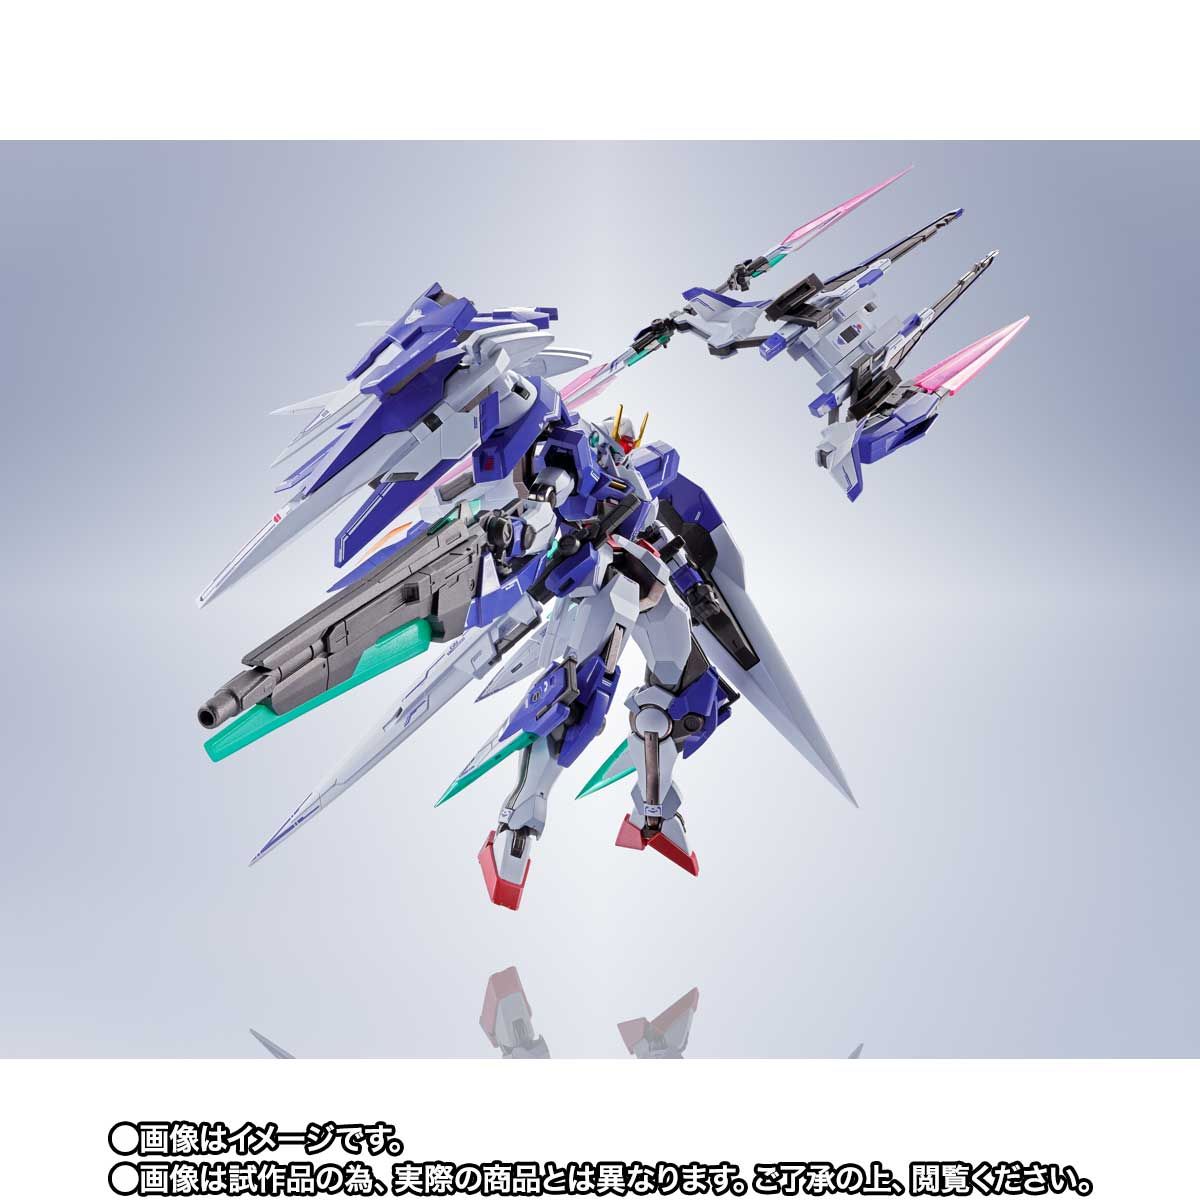 Metal Robot Damashii - 00 XN Raiser + Seven Sword + GN Sword II Blaster Set